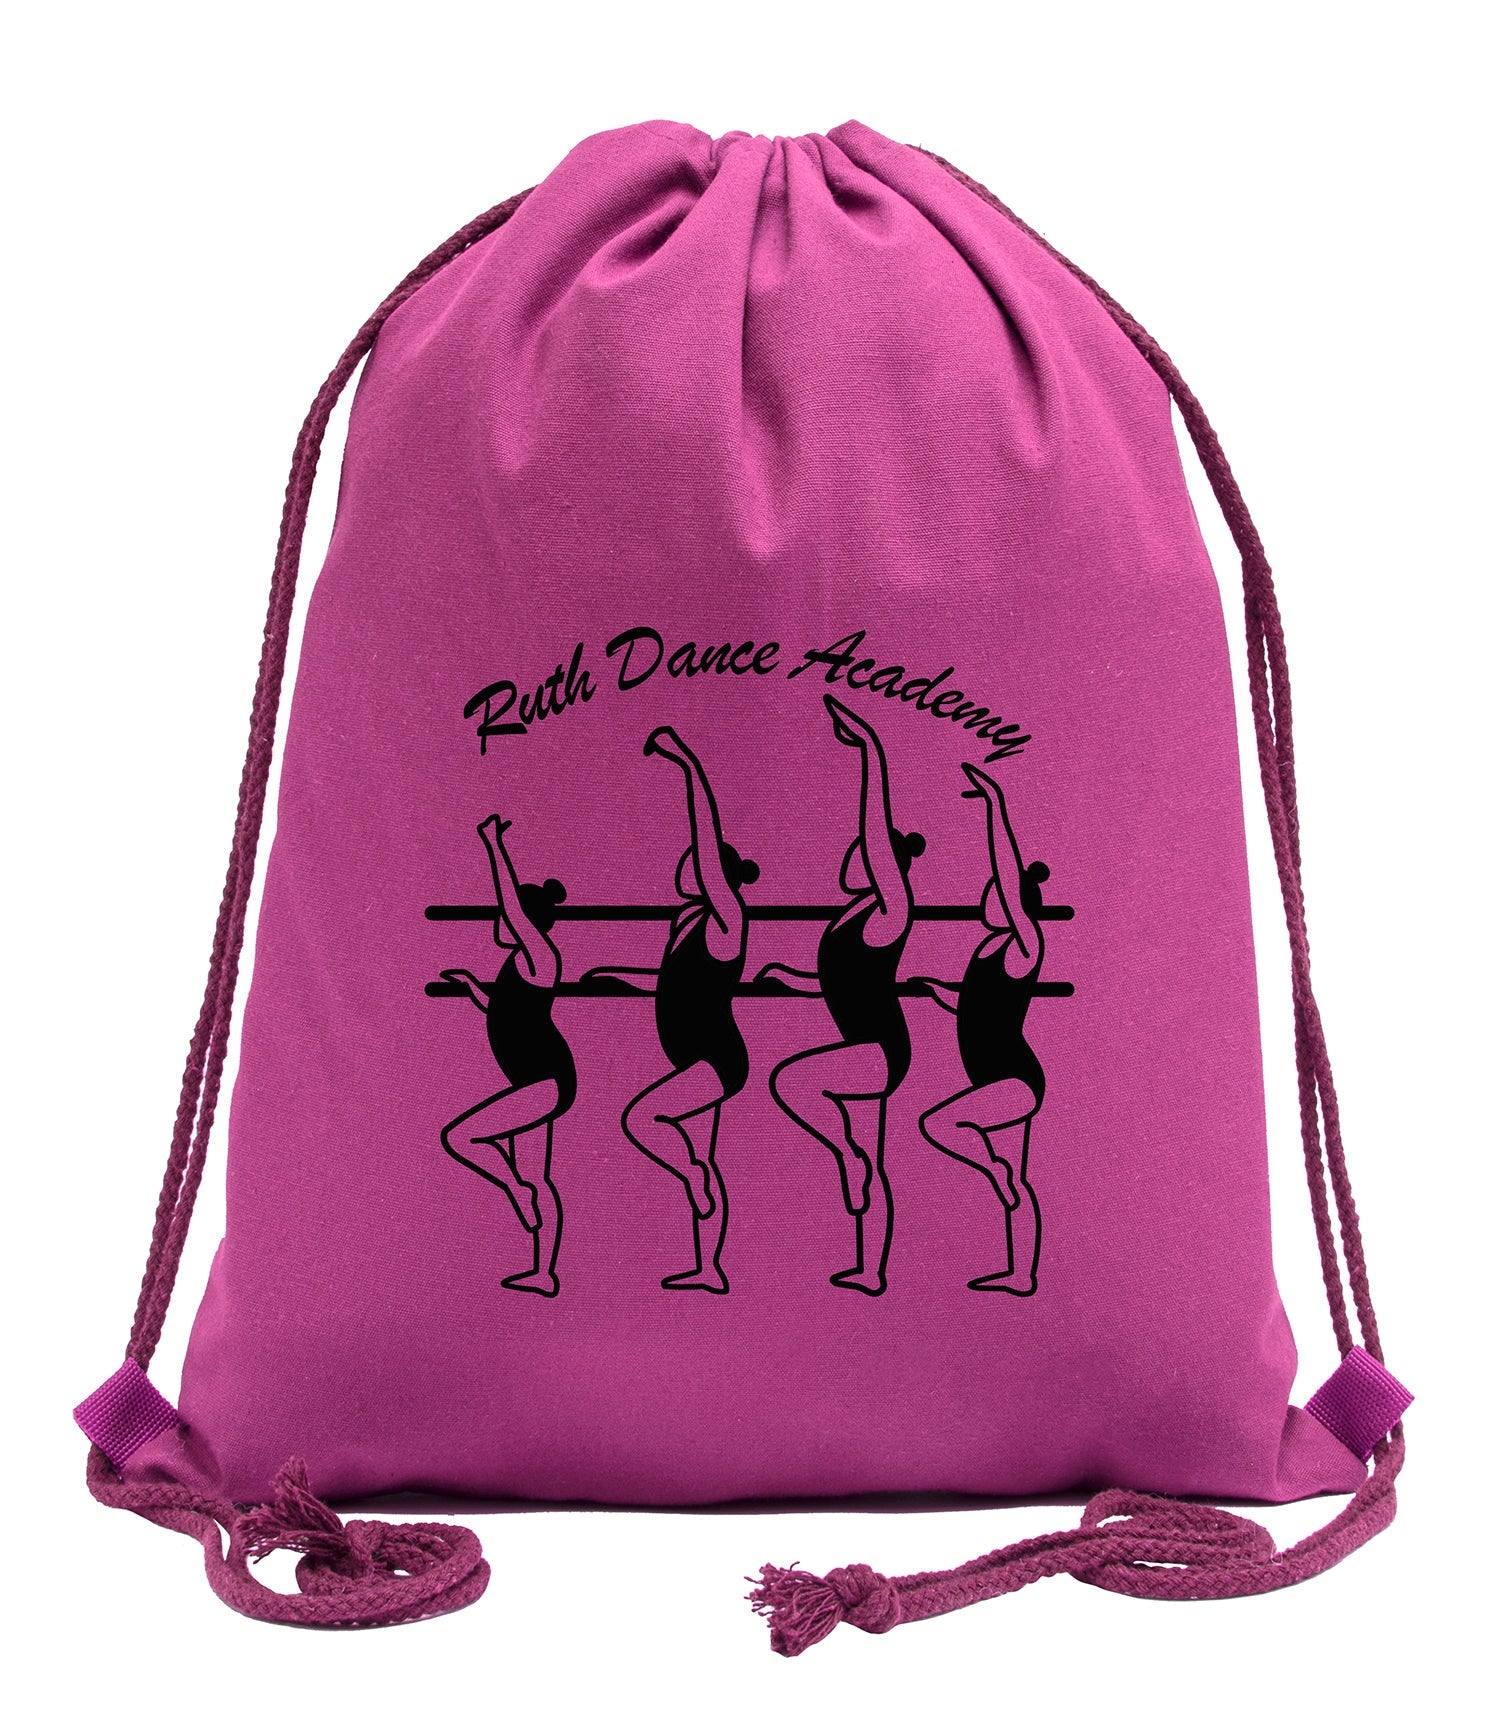 Ballerinas on Barre Custom Cotton Drawstring Bag